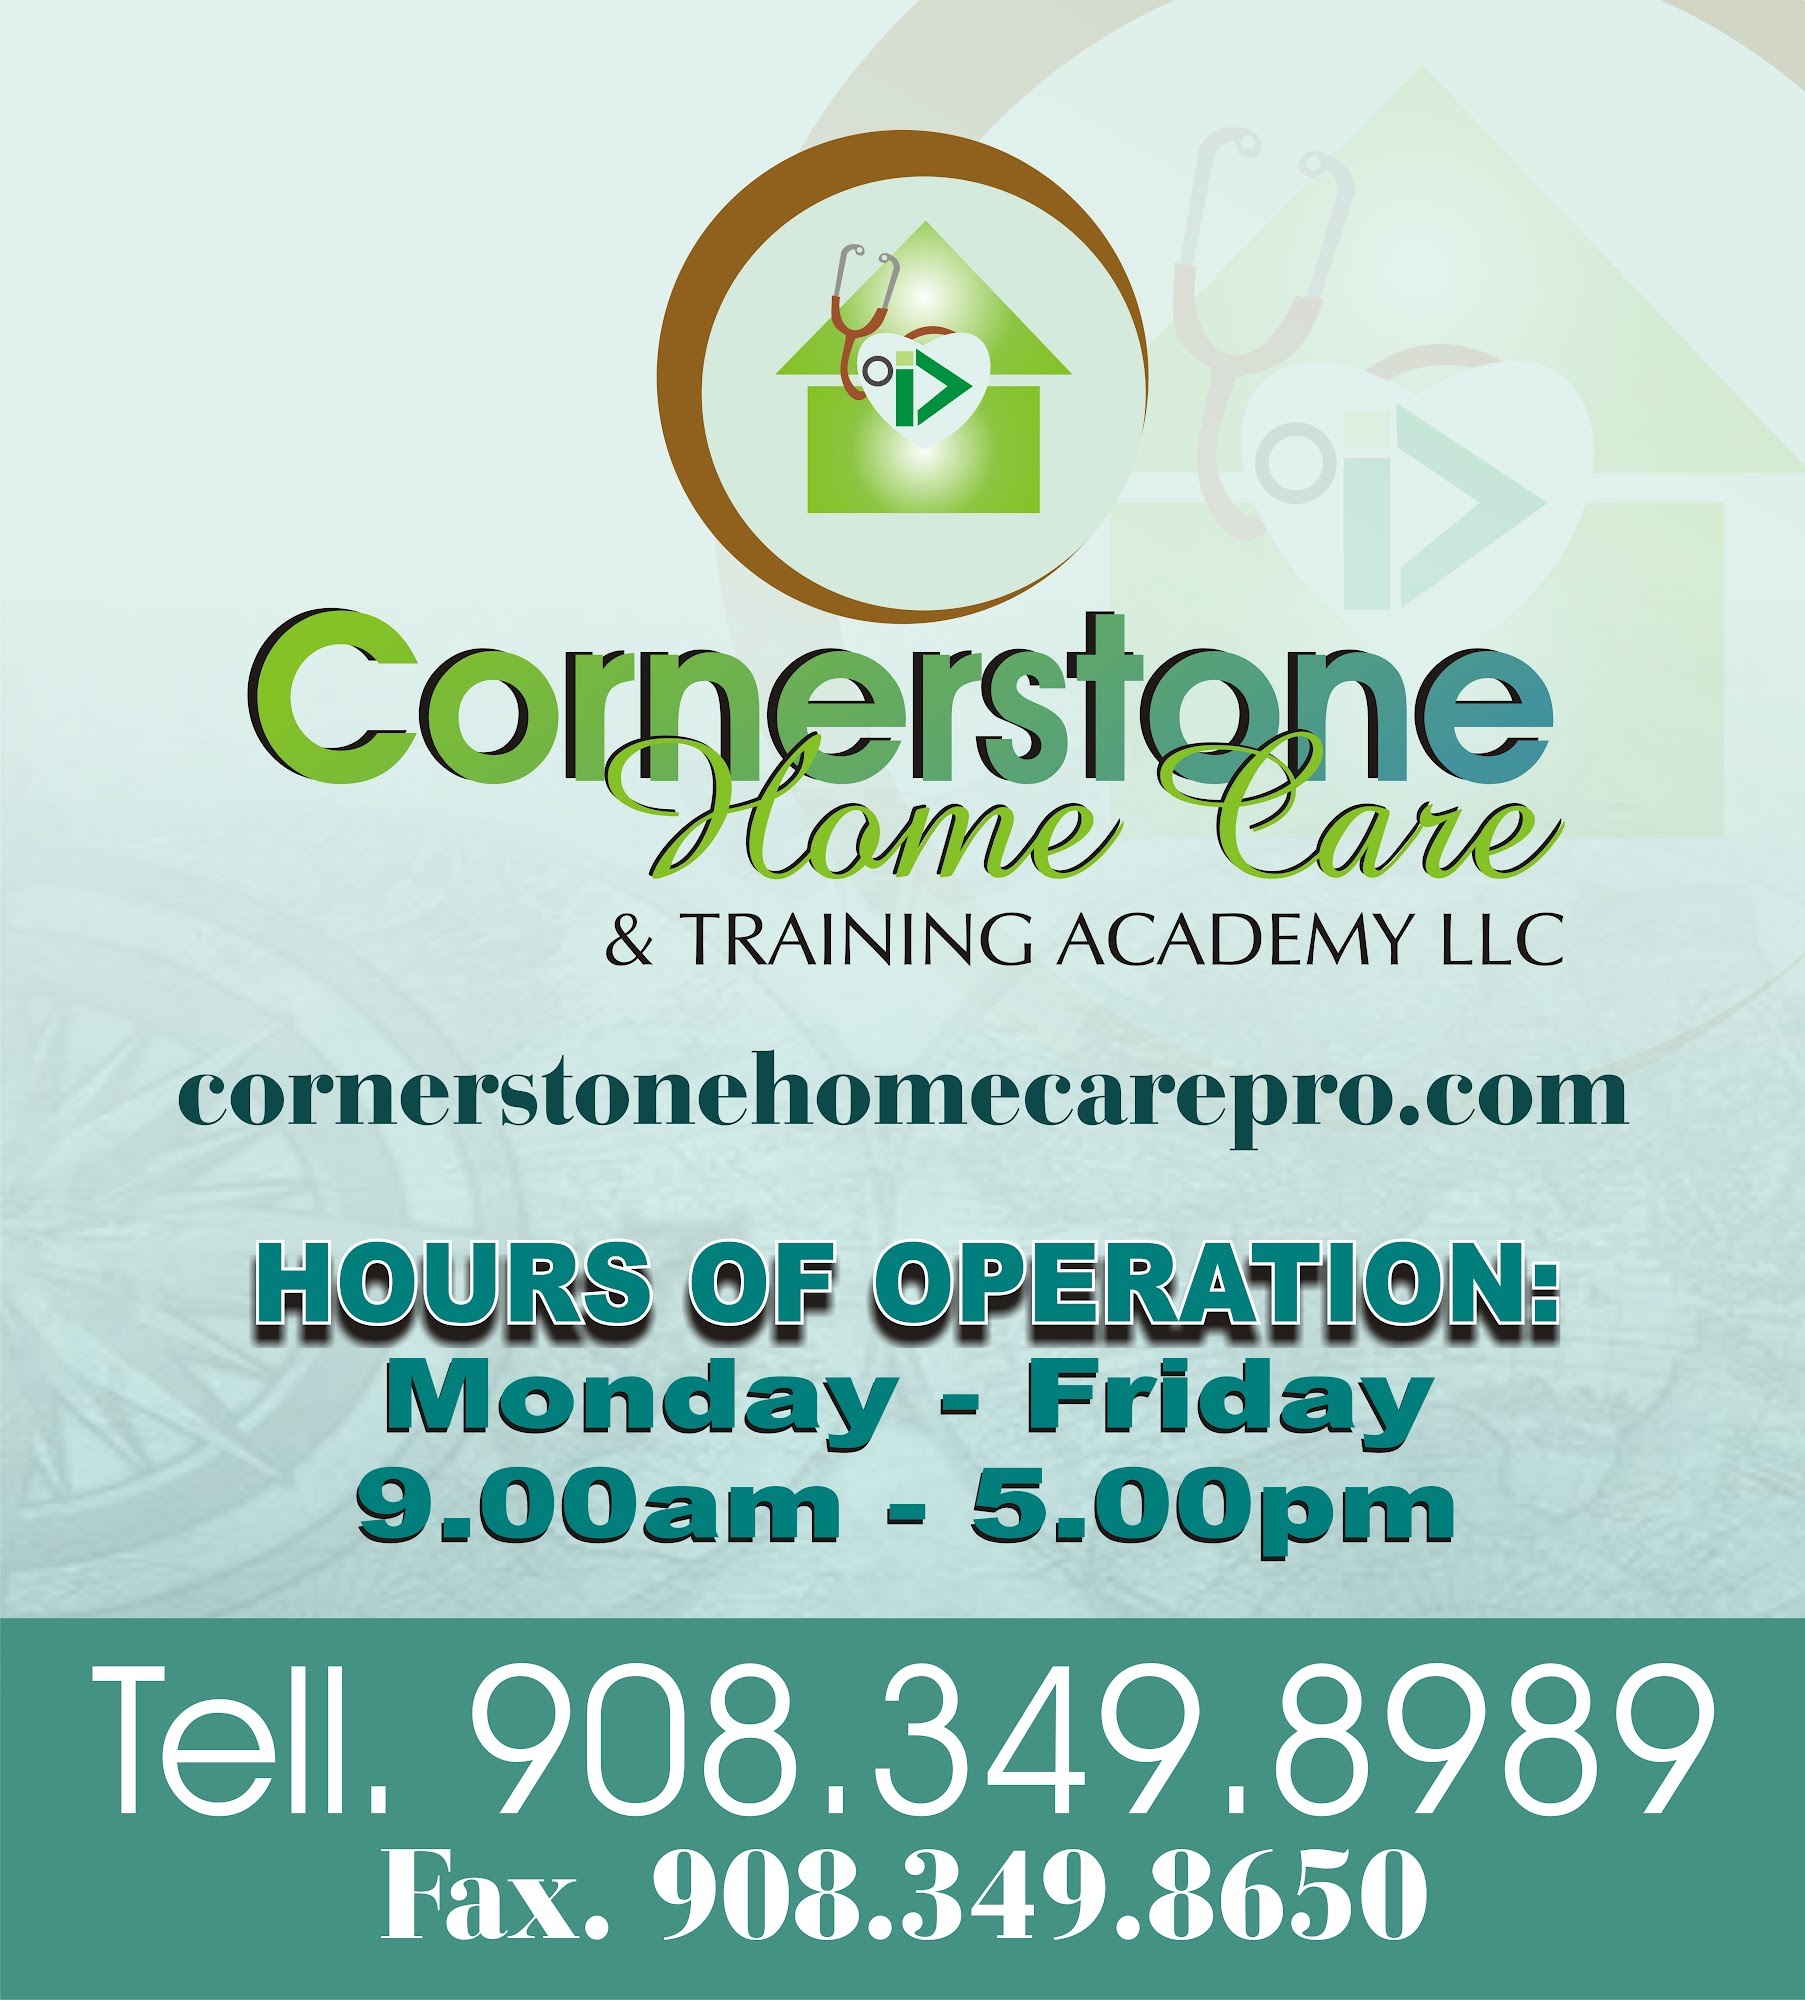 Cornerstone Home Care & Training Academy